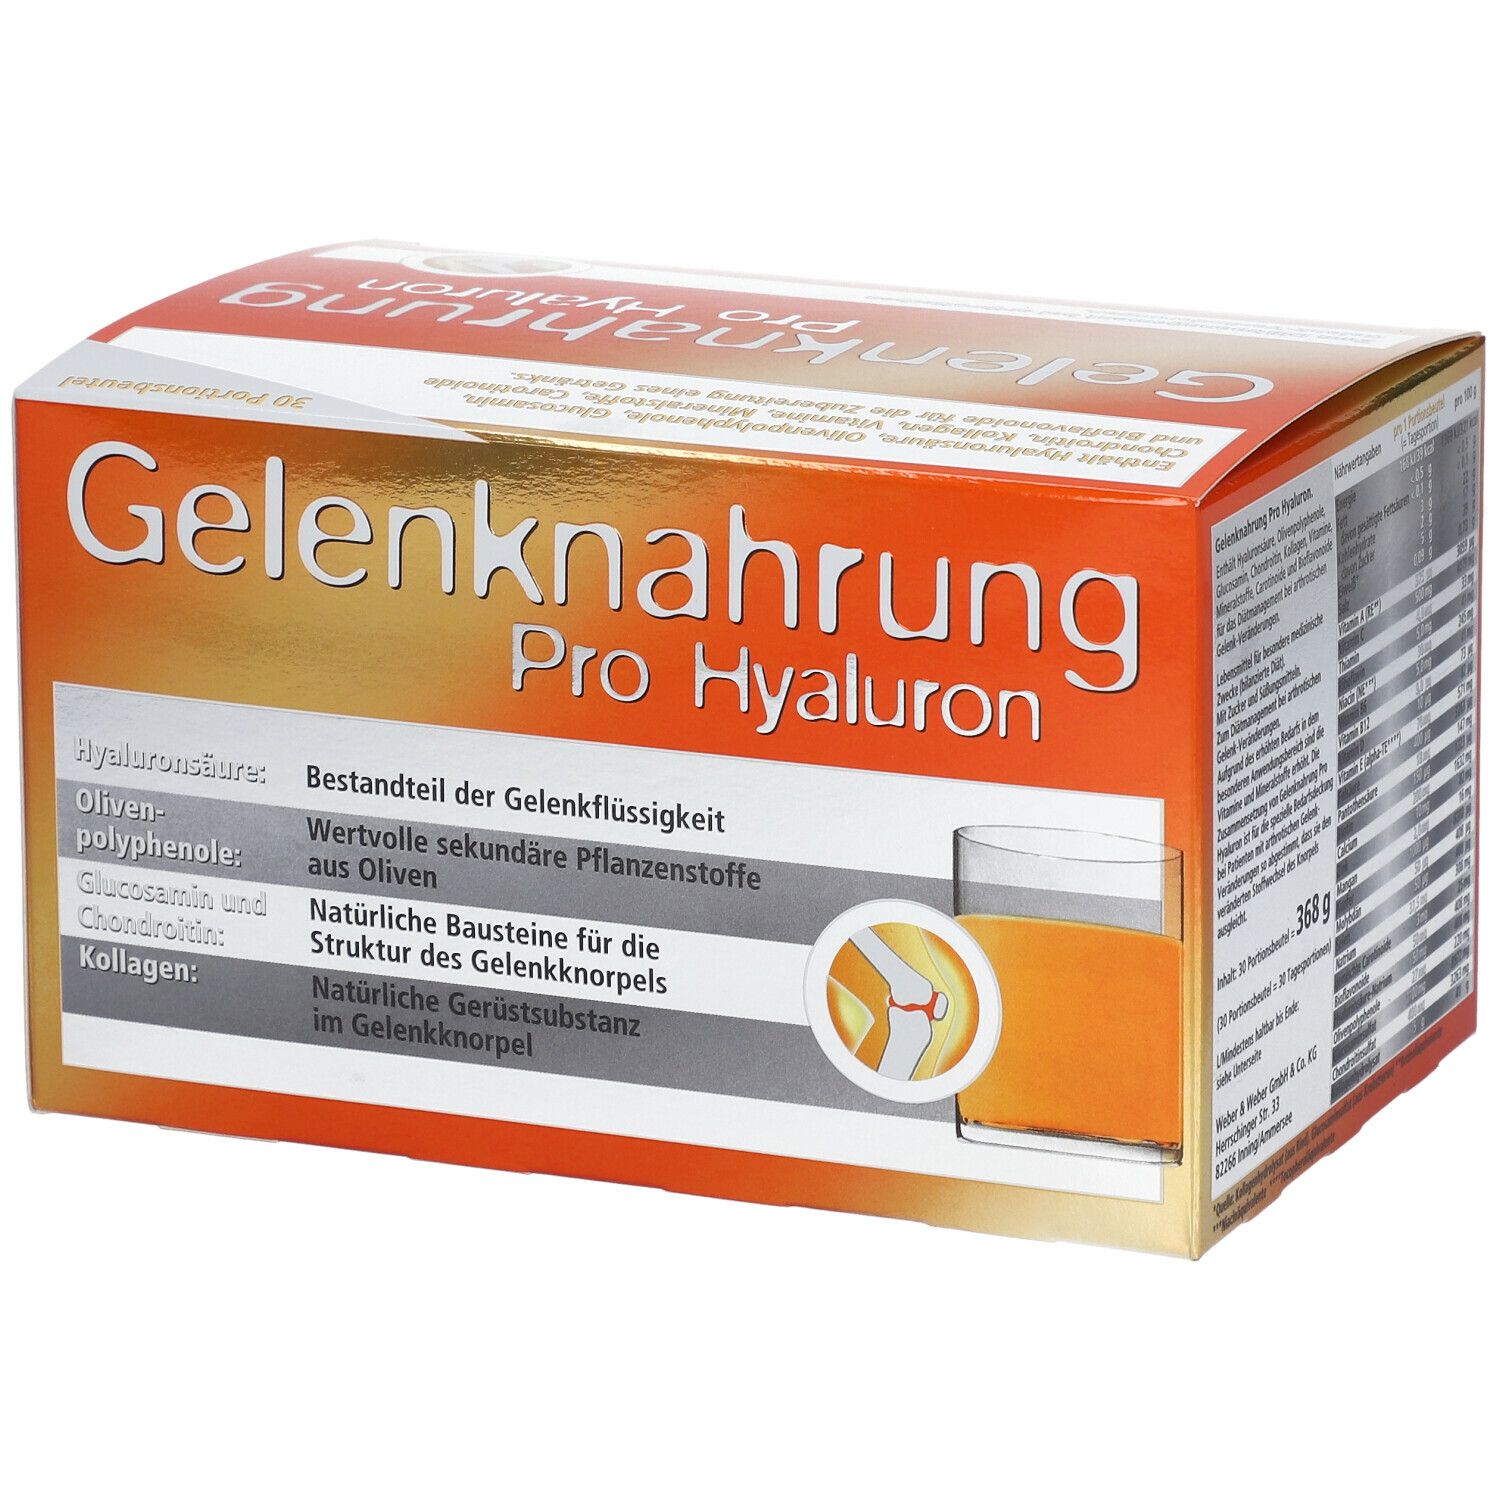 Orthoexpert® Gelenknahrung Pro Hyaluron